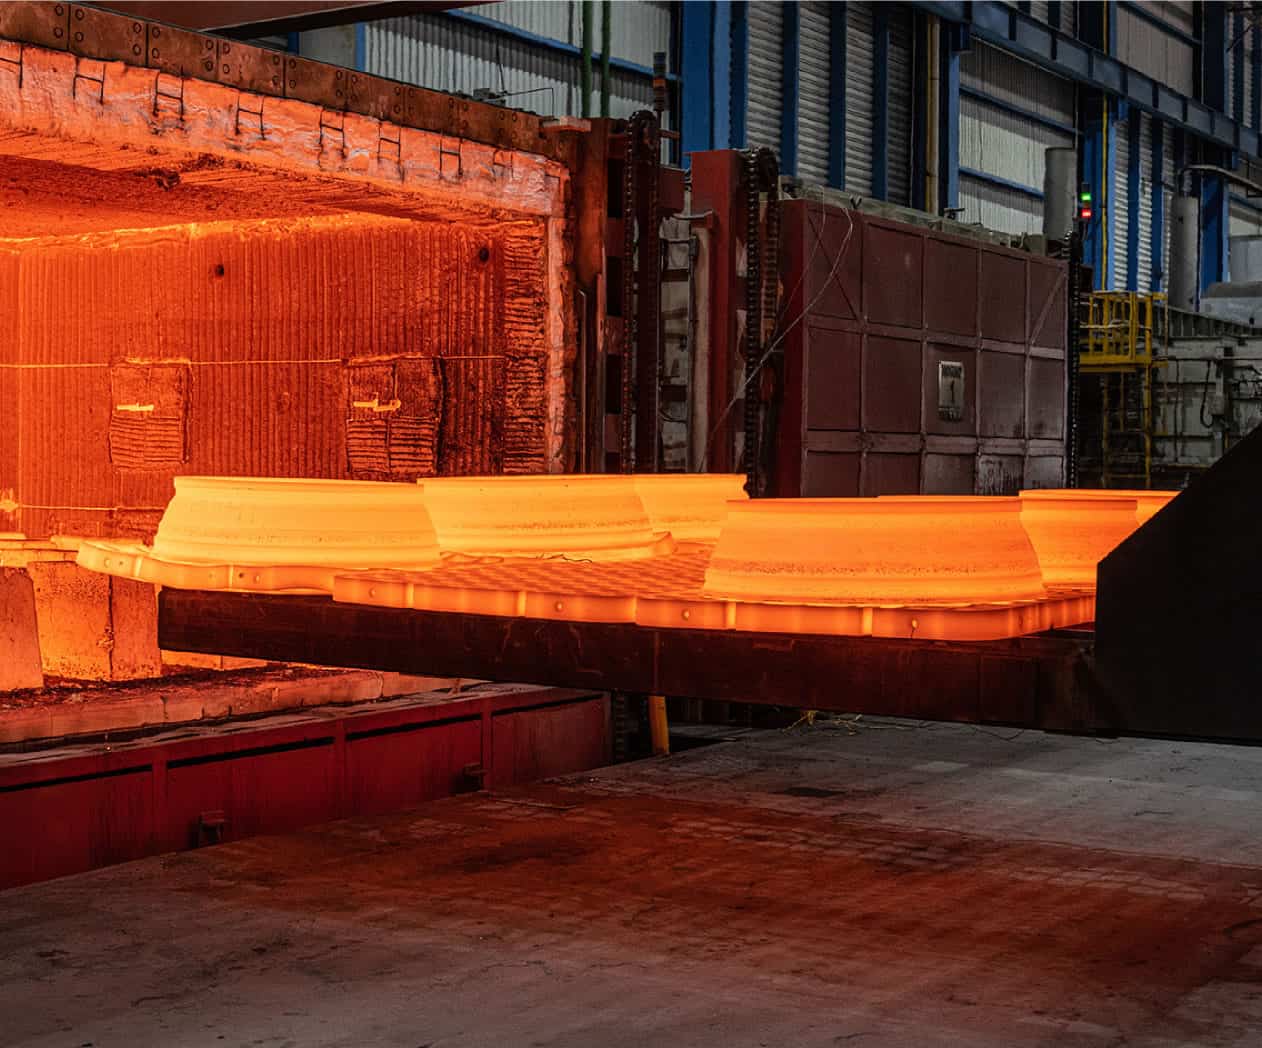 Glowing hot steel billets being transported on a conveyor in an industrial steel mill.